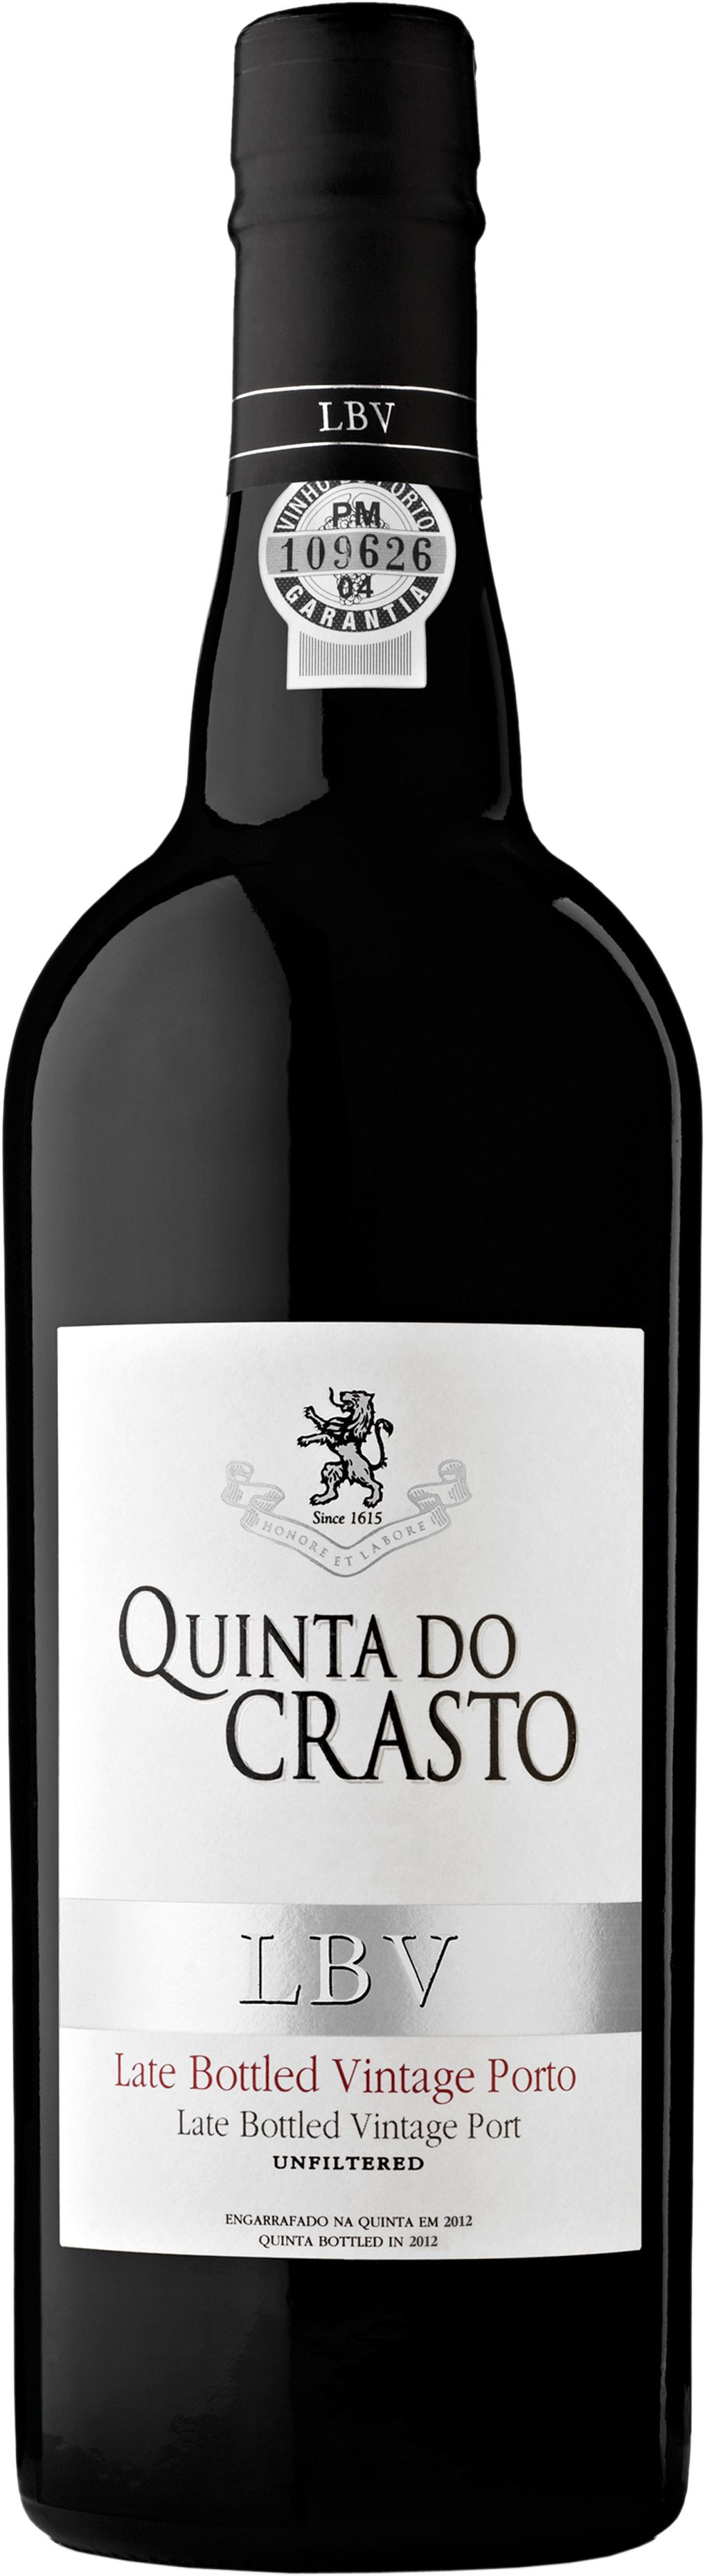 Quinta Do Crasto, Late Bottled Vintage Porto, 2007